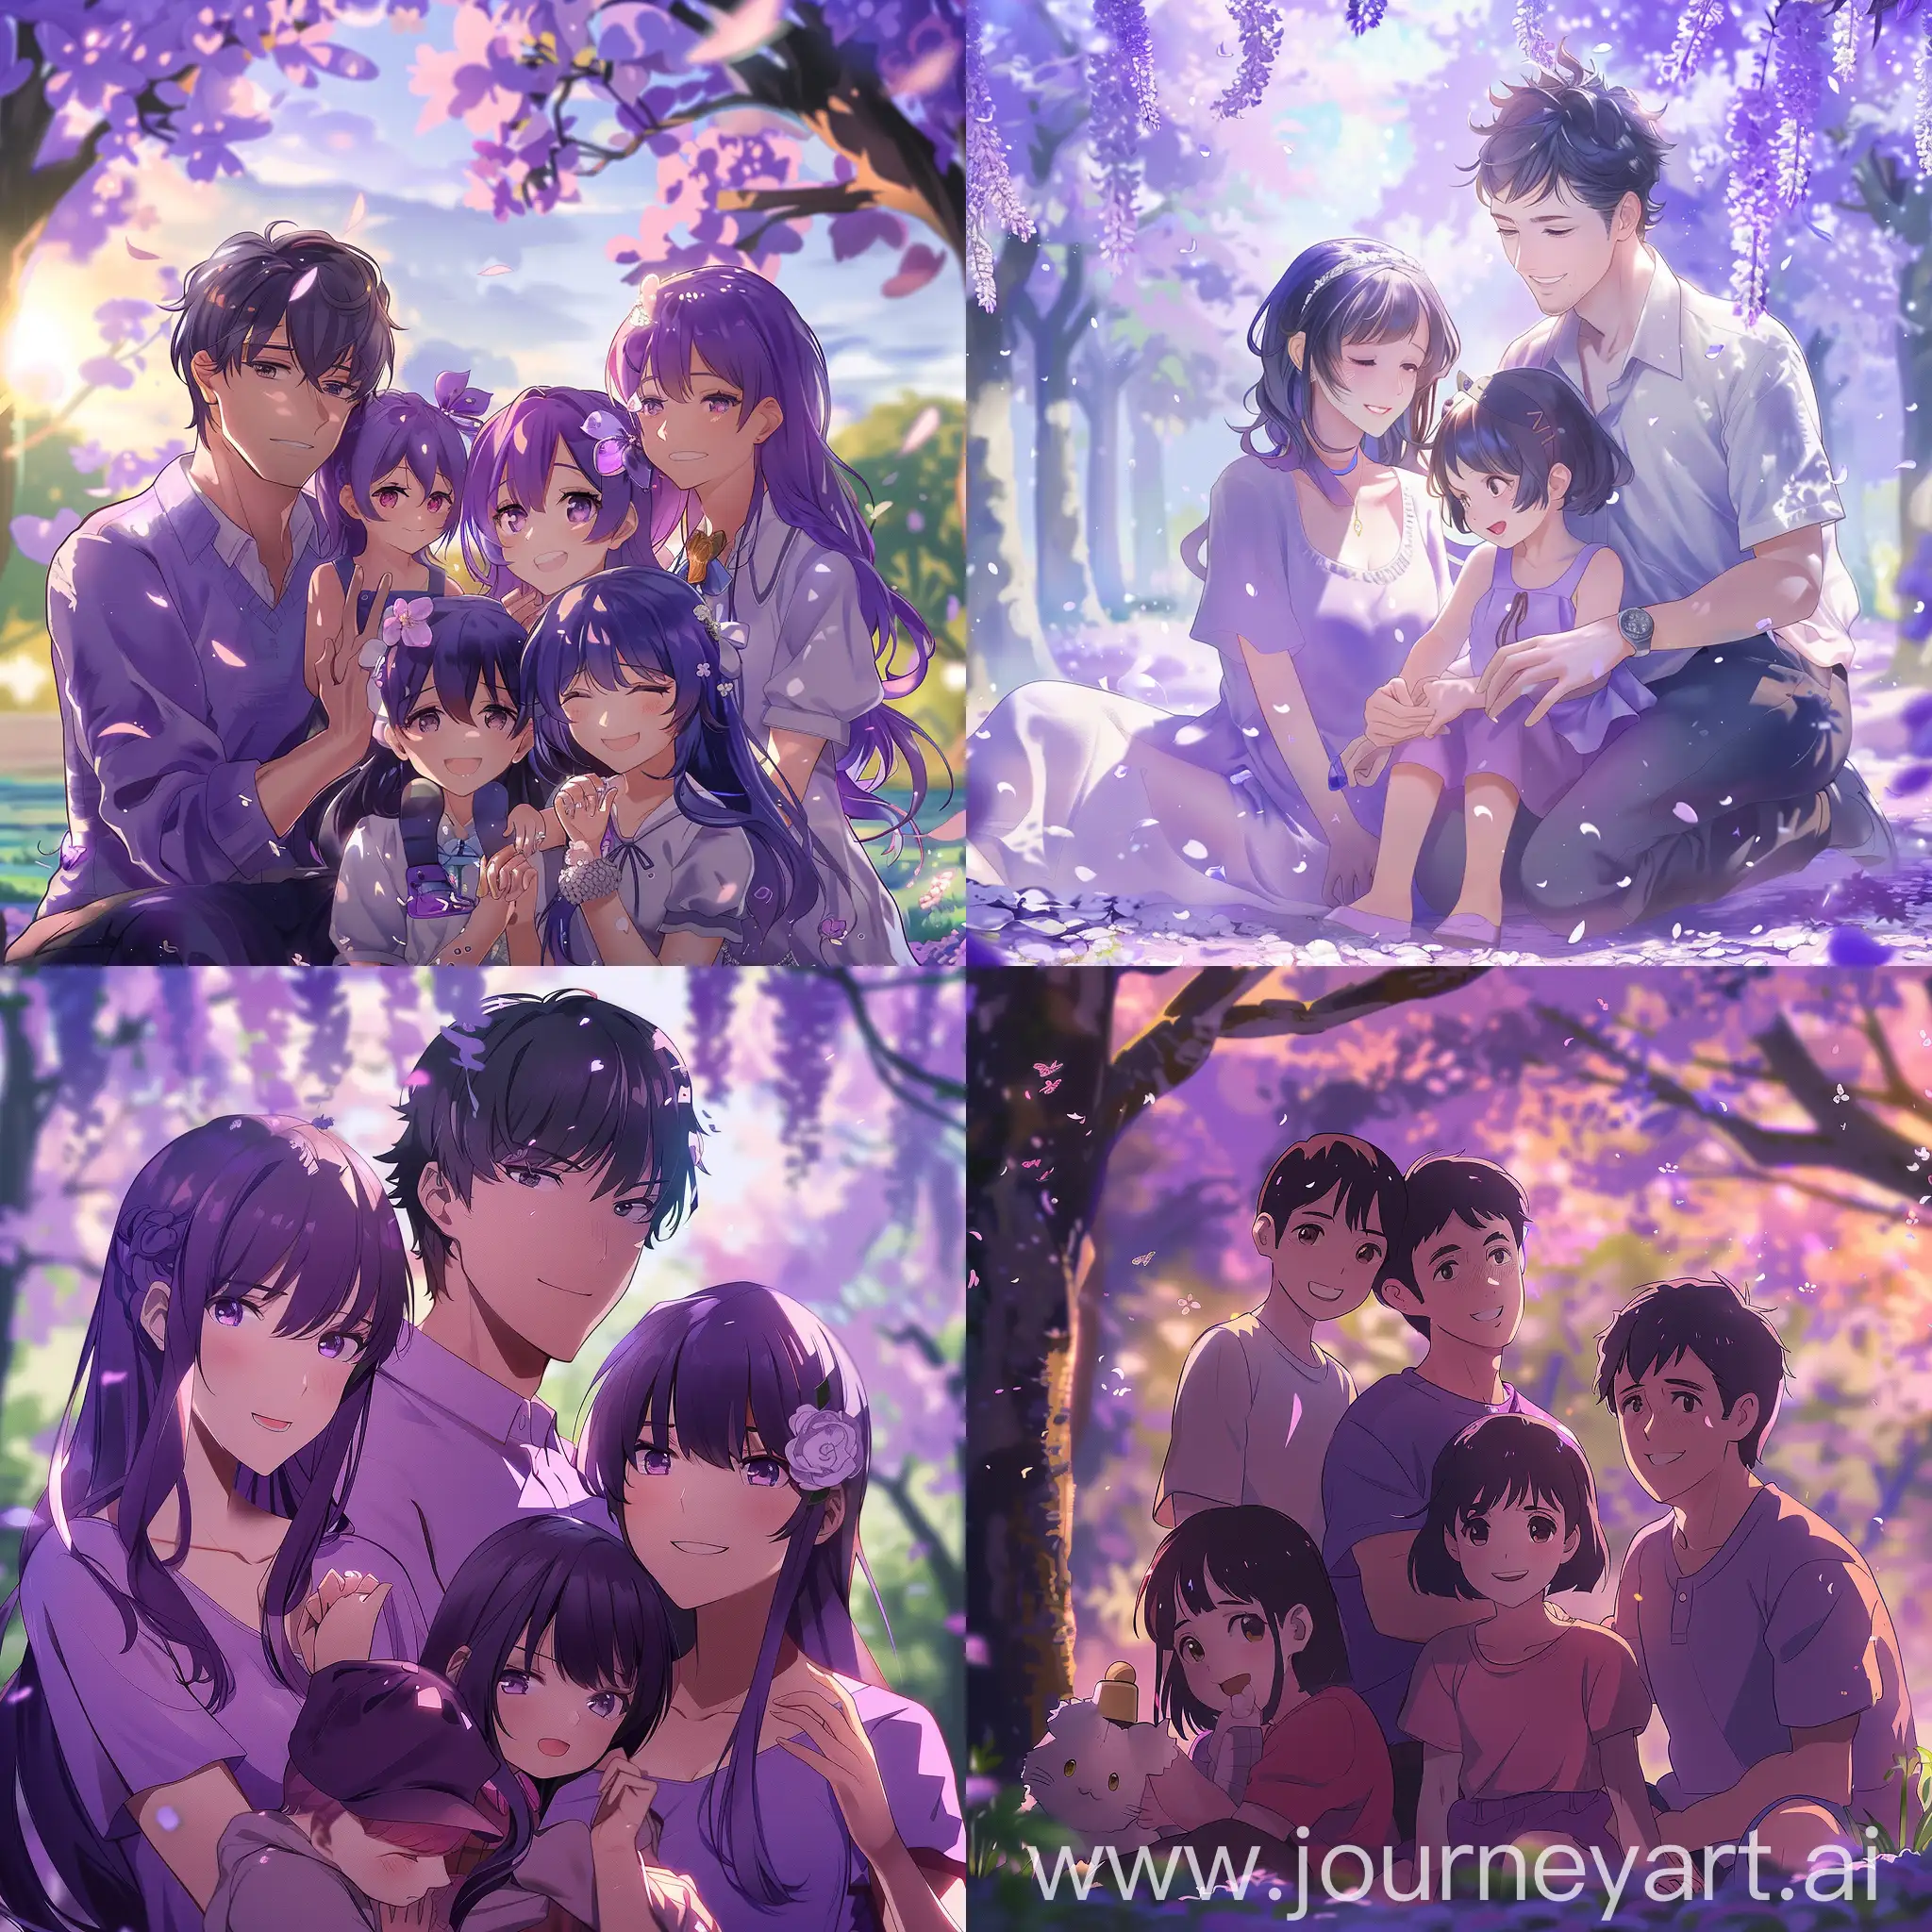 Joyful-Anime-Family-in-Beautiful-Purple-Atmosphere